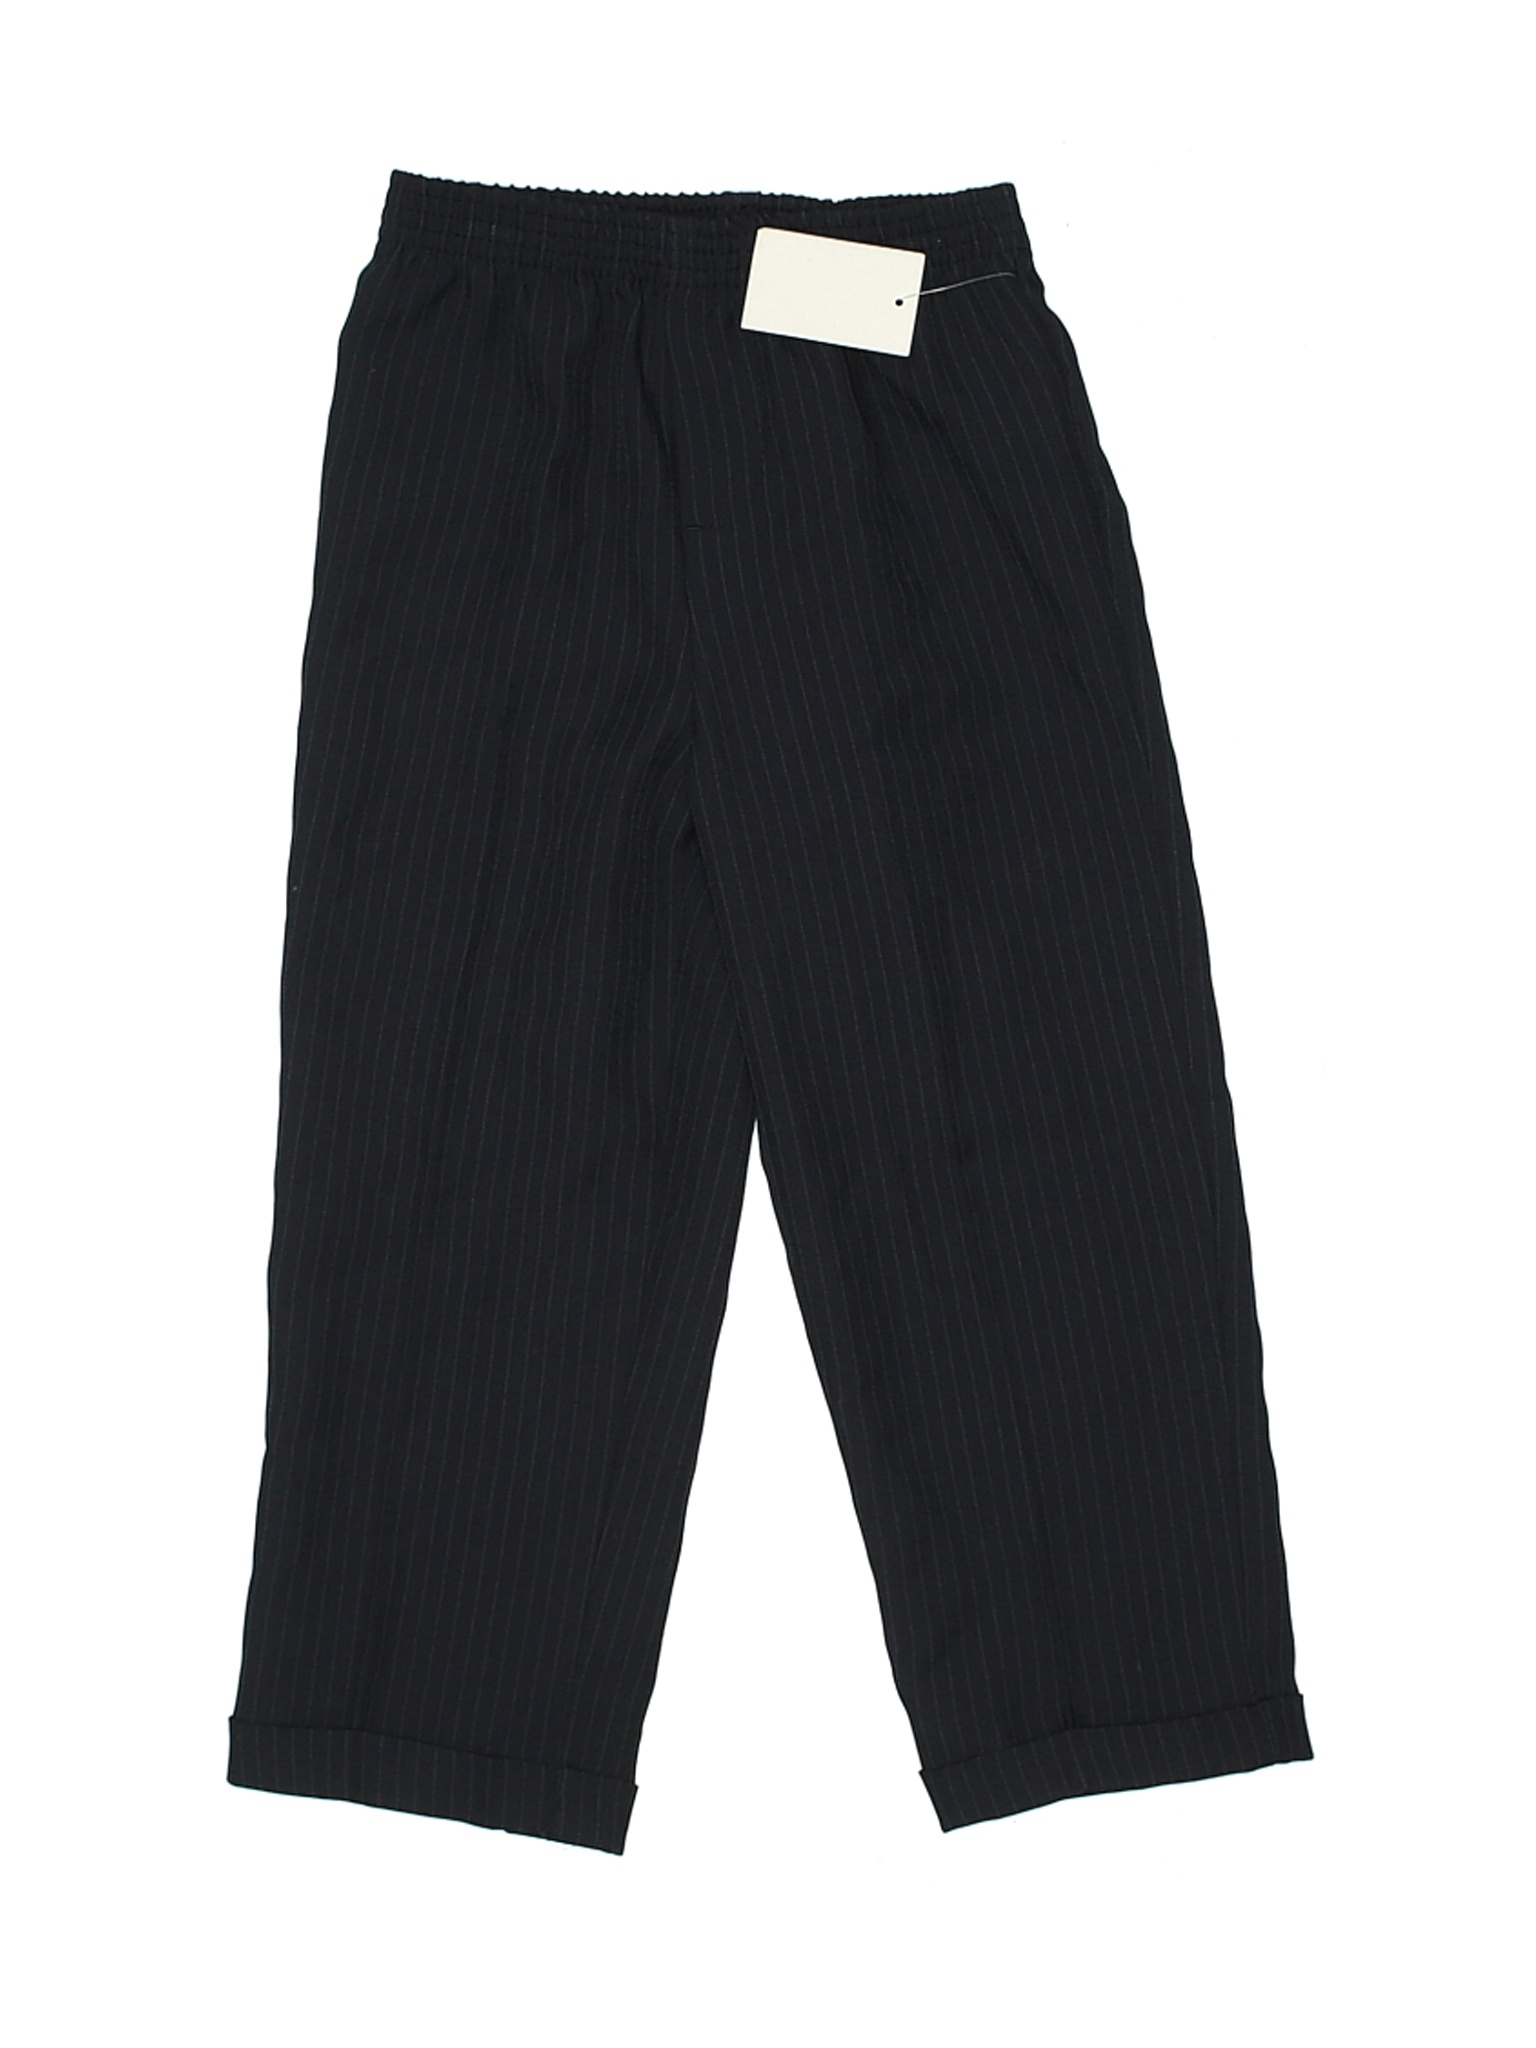 NWT Unbranded Boys Black Dress Pants 4T | eBay